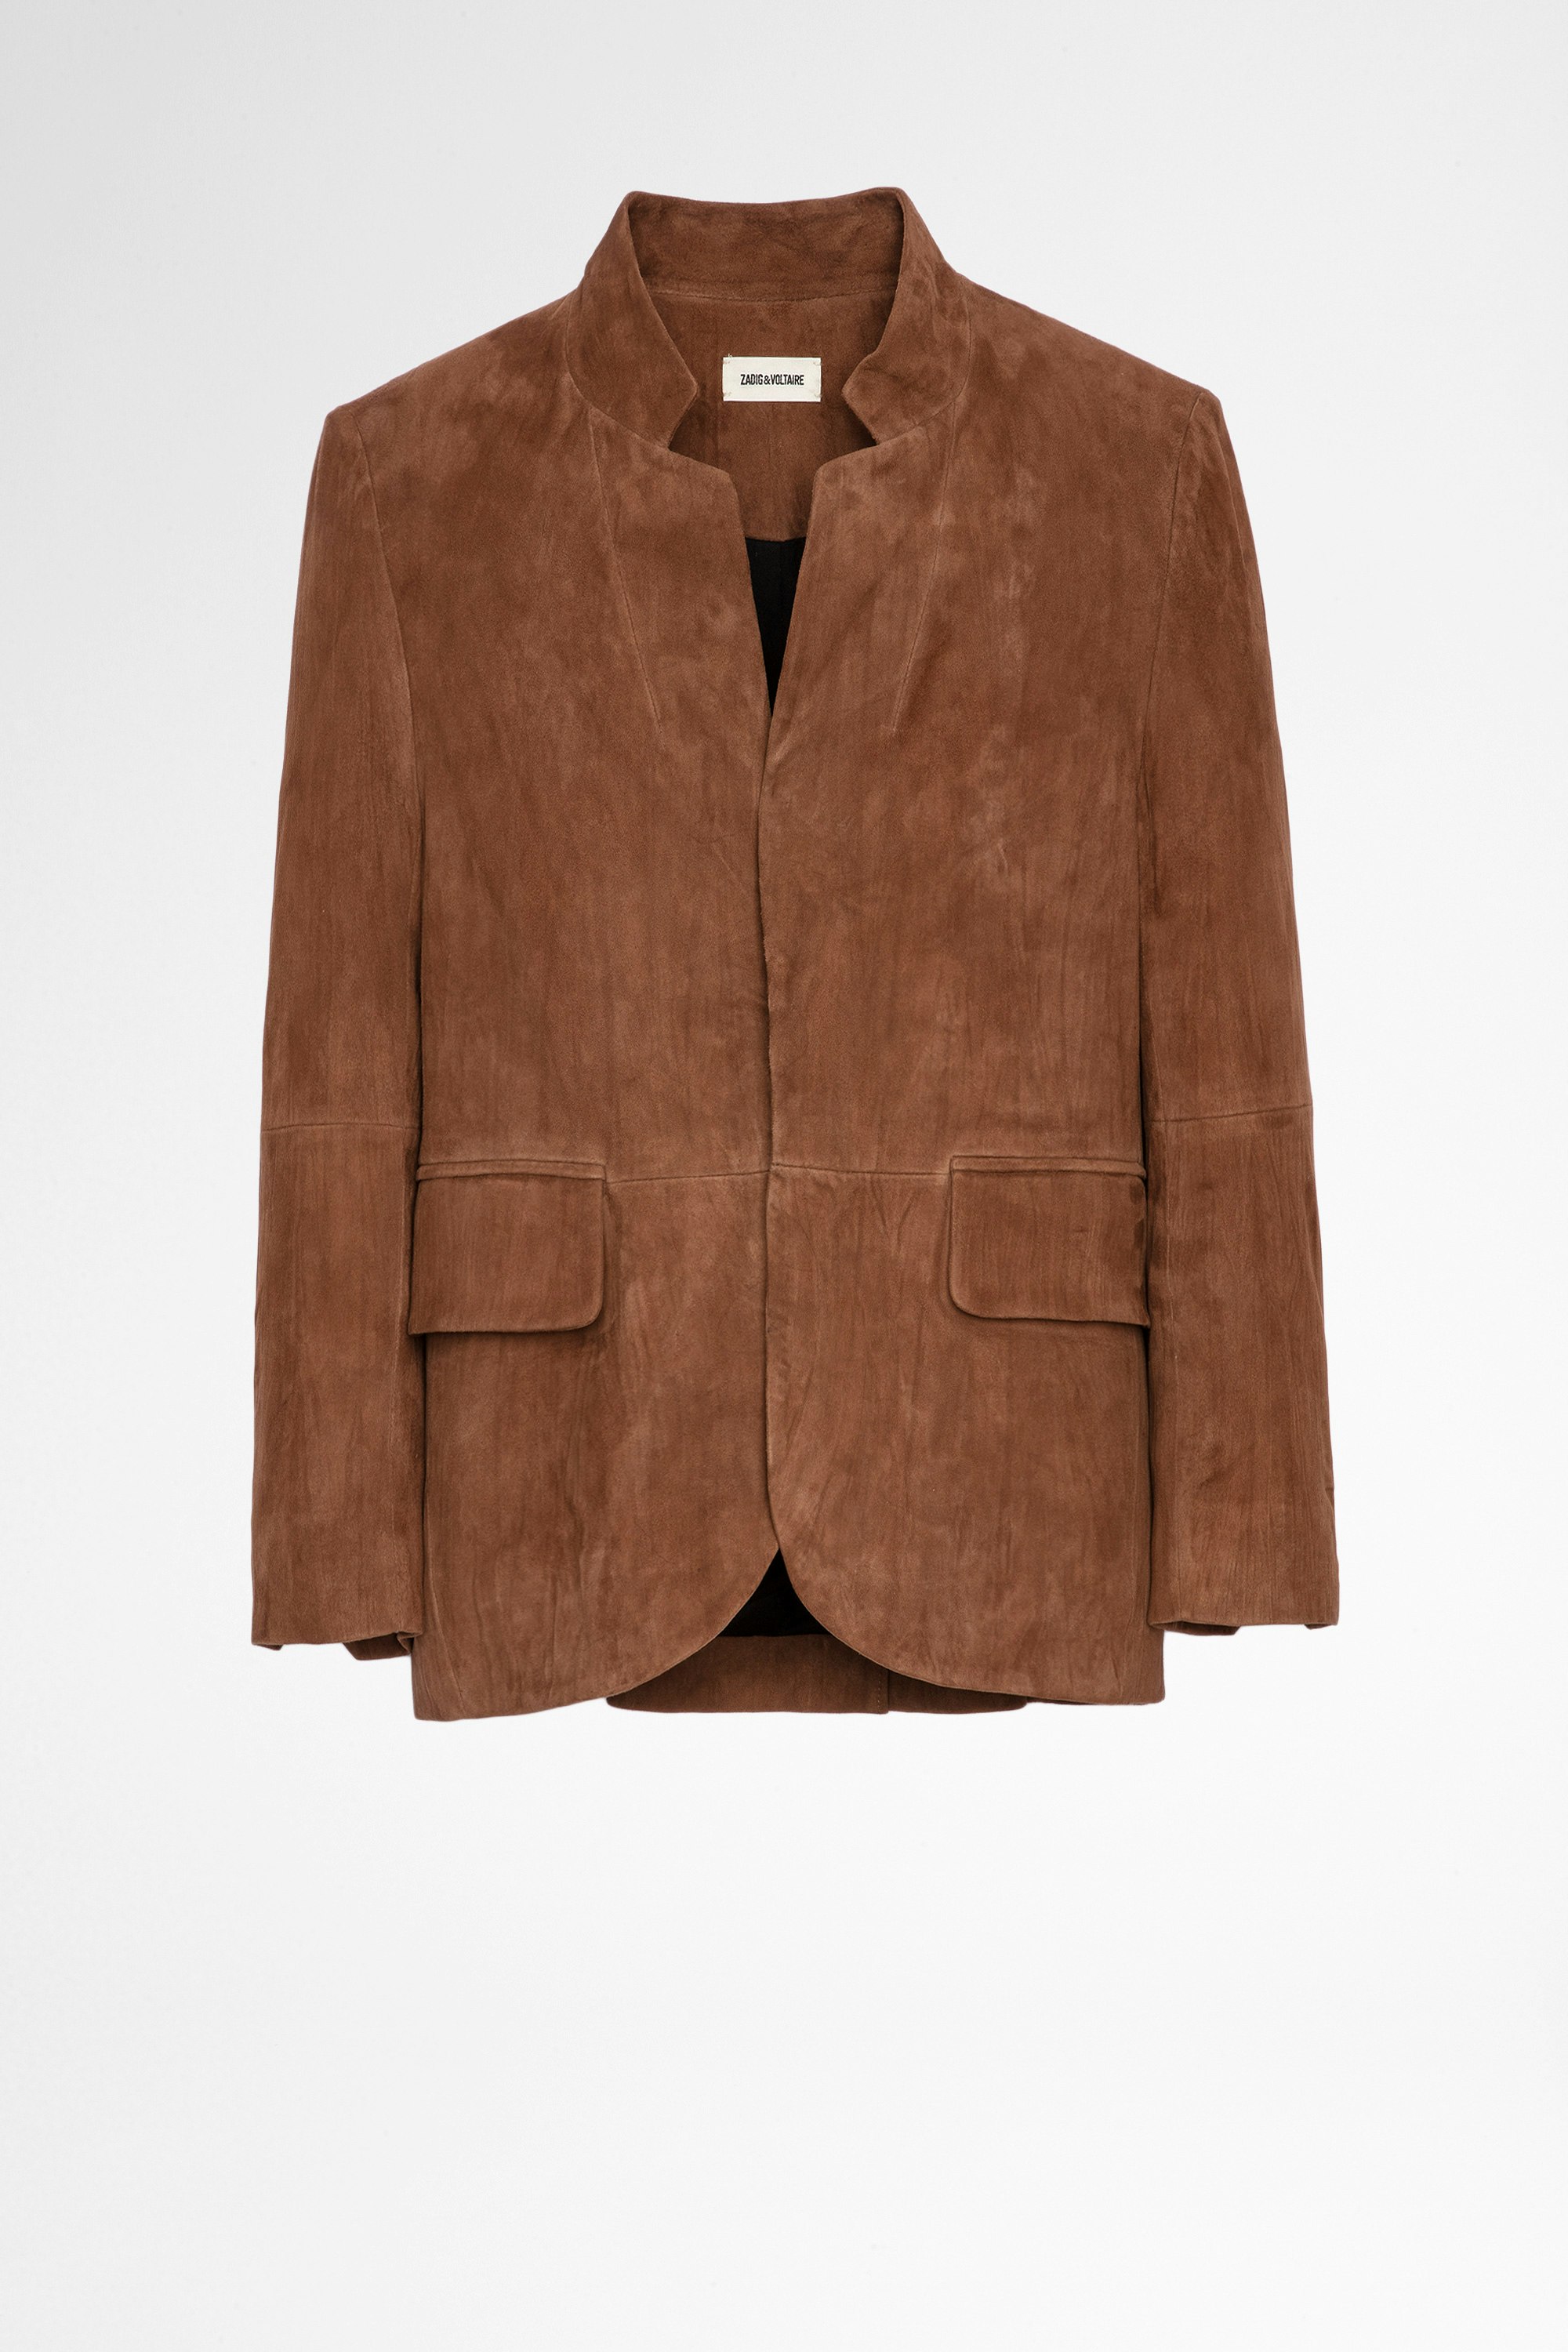 Verys Jacket  Women’s crumpled leather blazer in cognac colour 